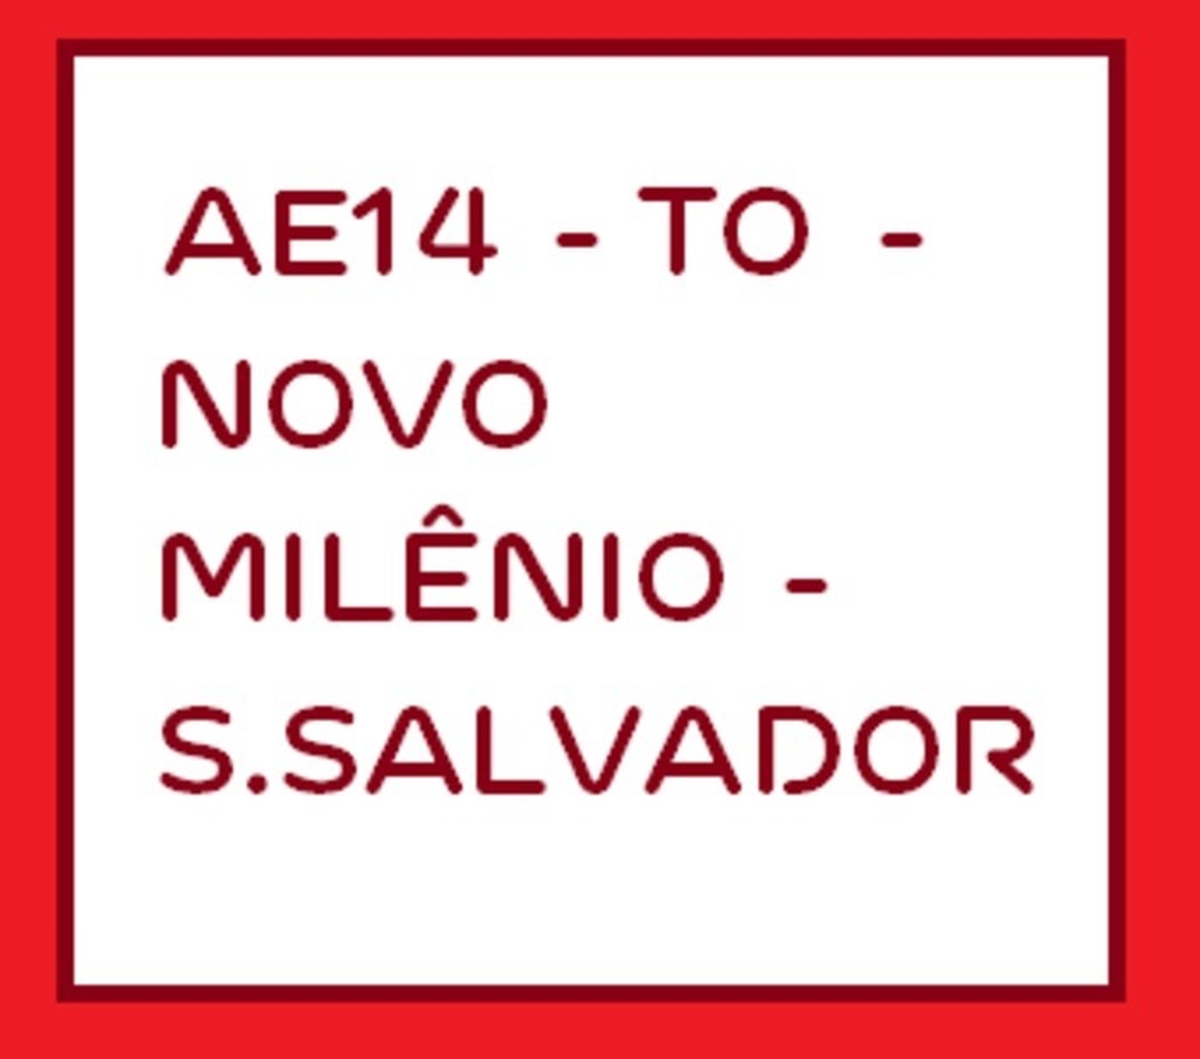 AE14 - TO - Novo Milênio